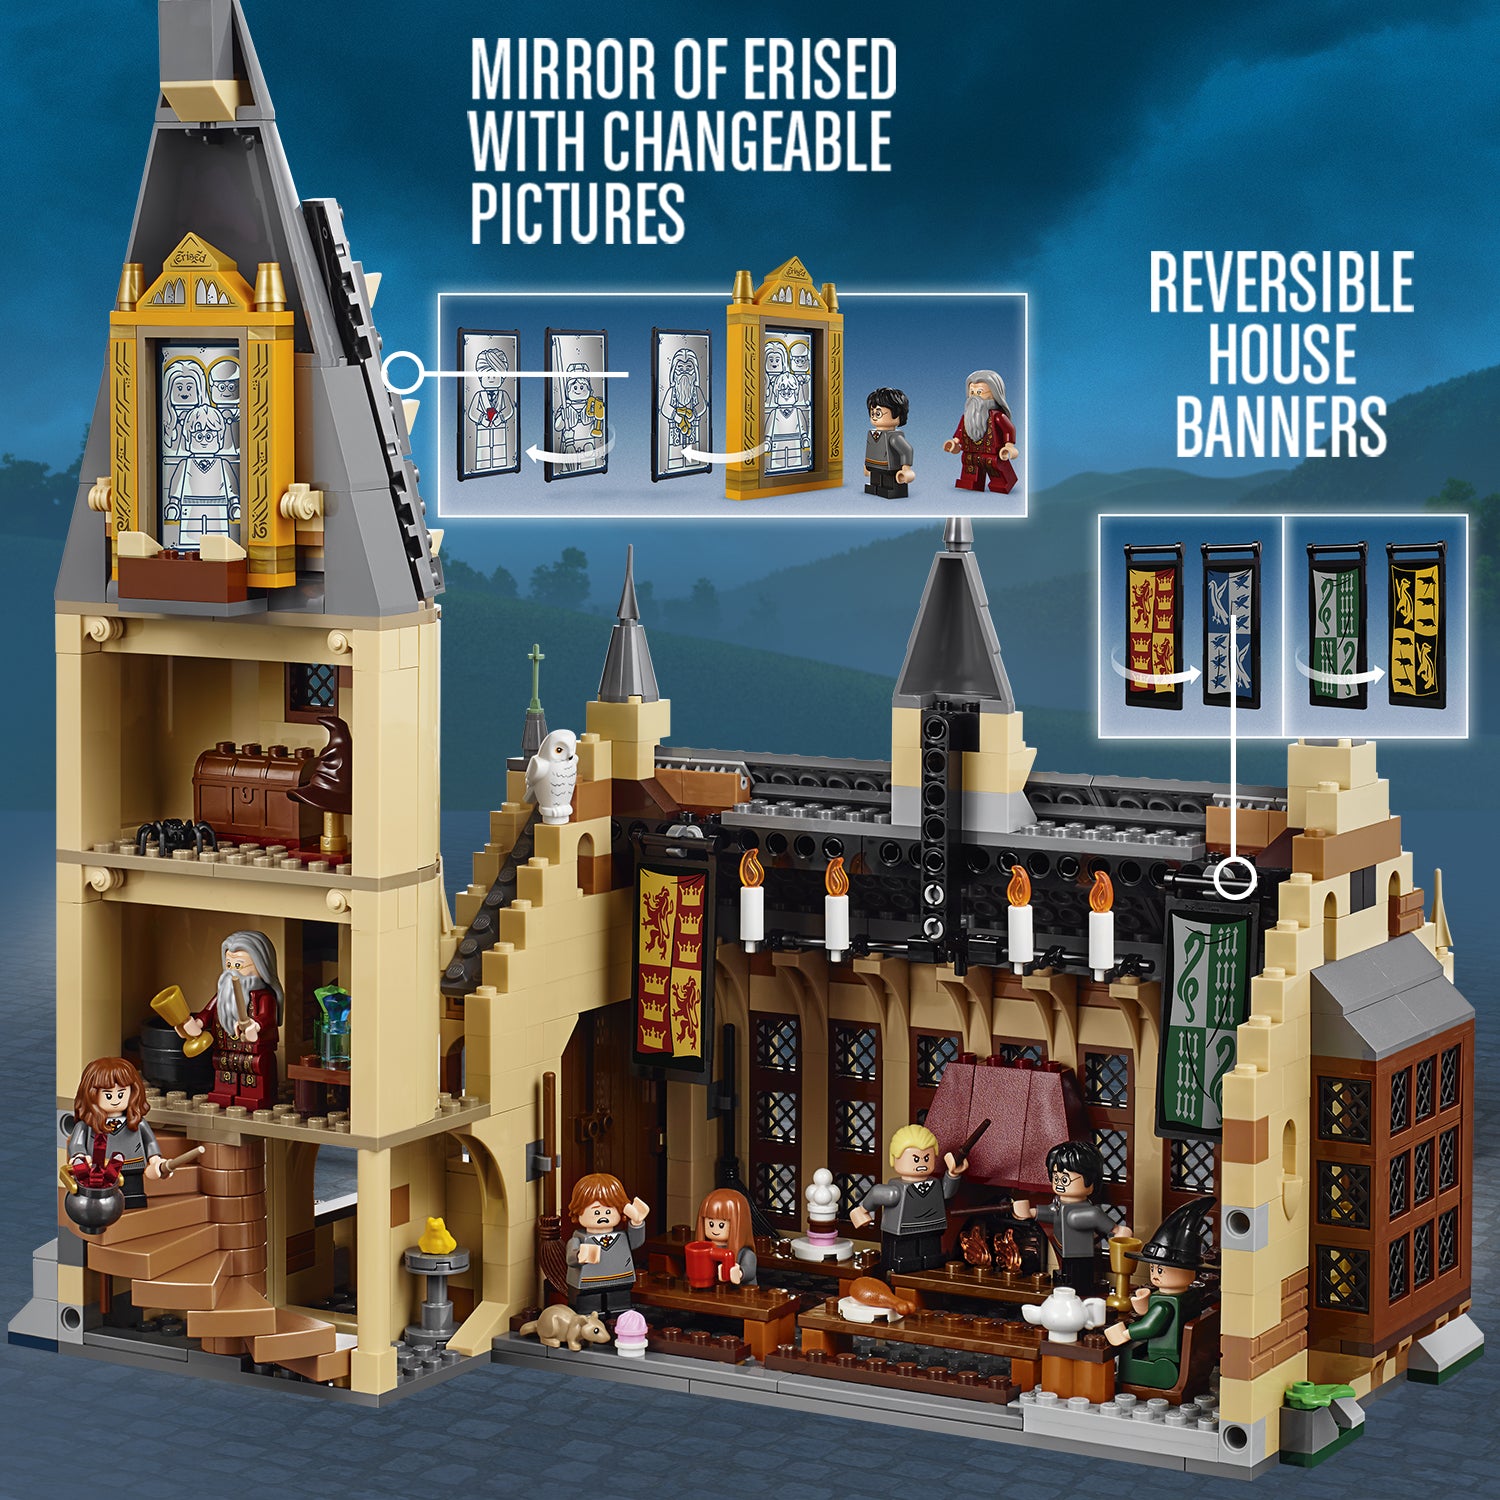 The LEGO® Mirror of Erised, Case Study